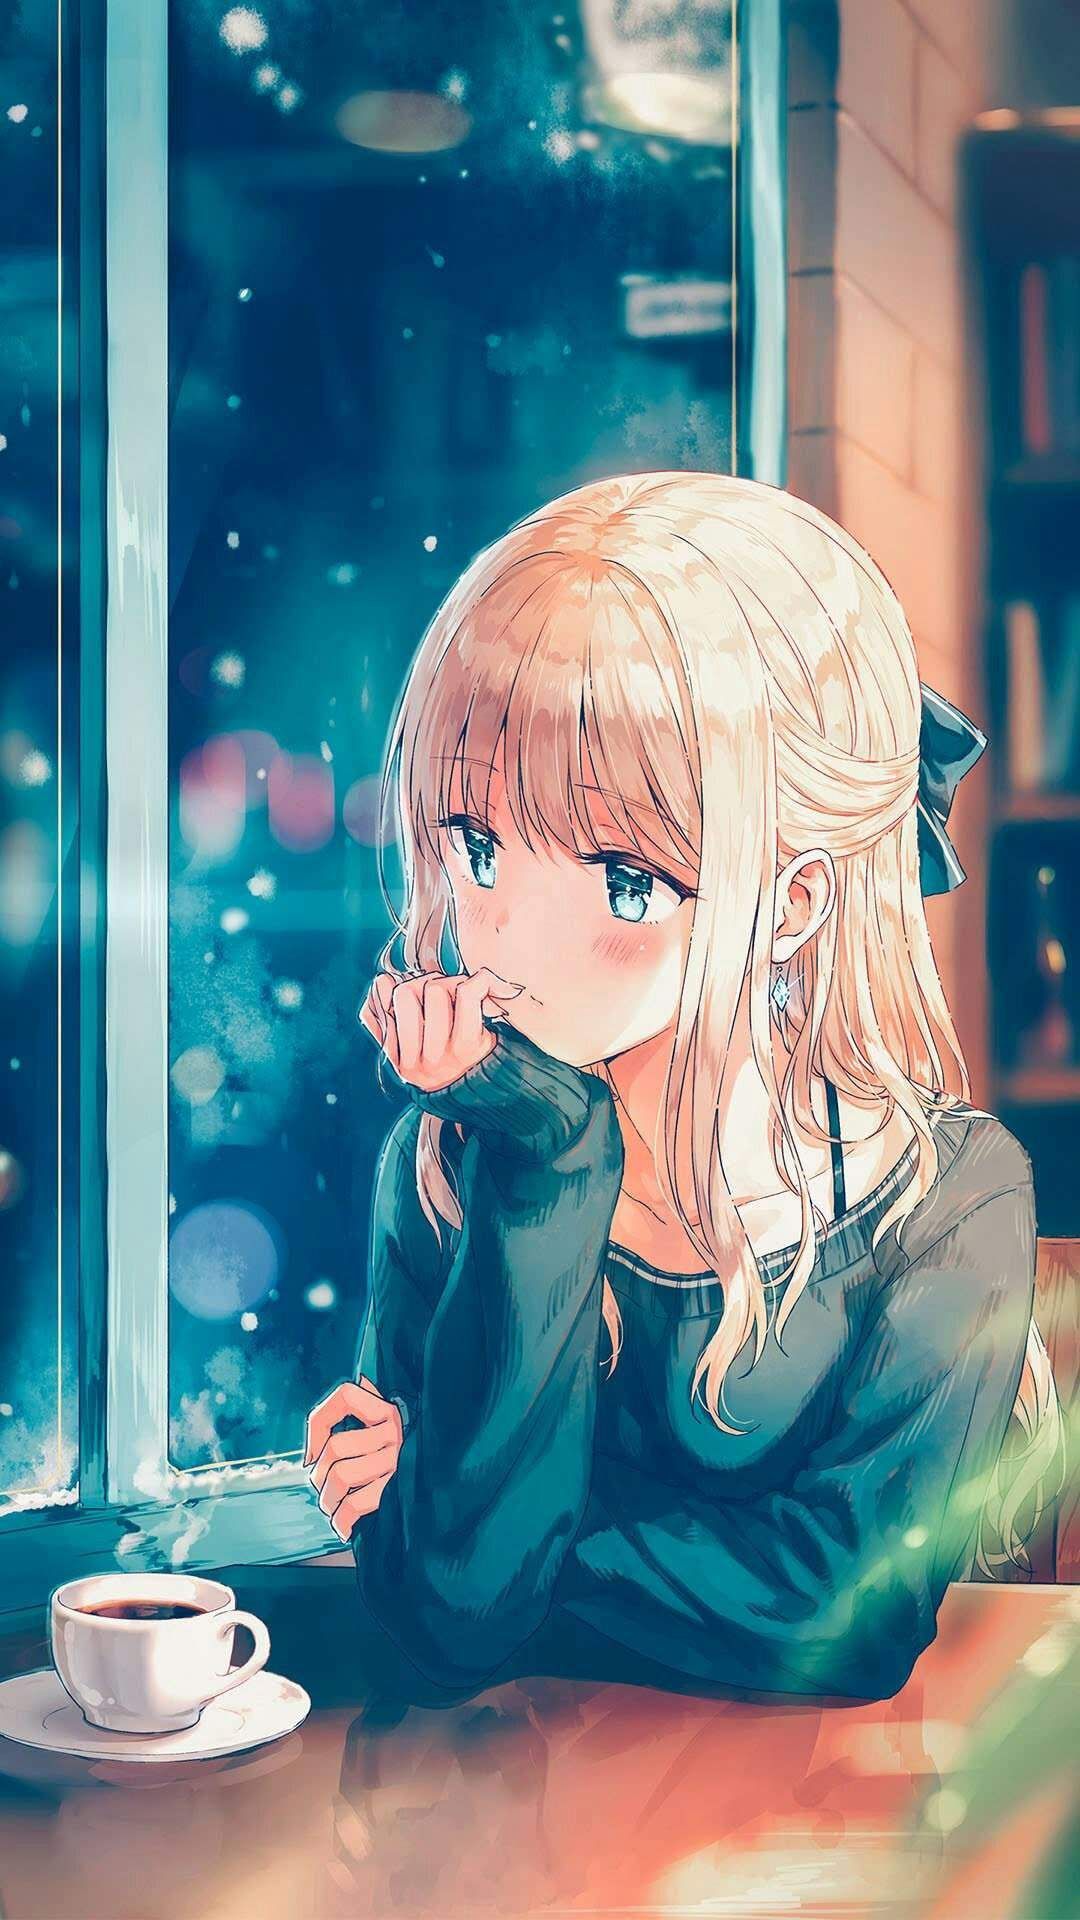 Sad Anime Girl iPad Wallpaper Anime Girl iPad Wallpaper